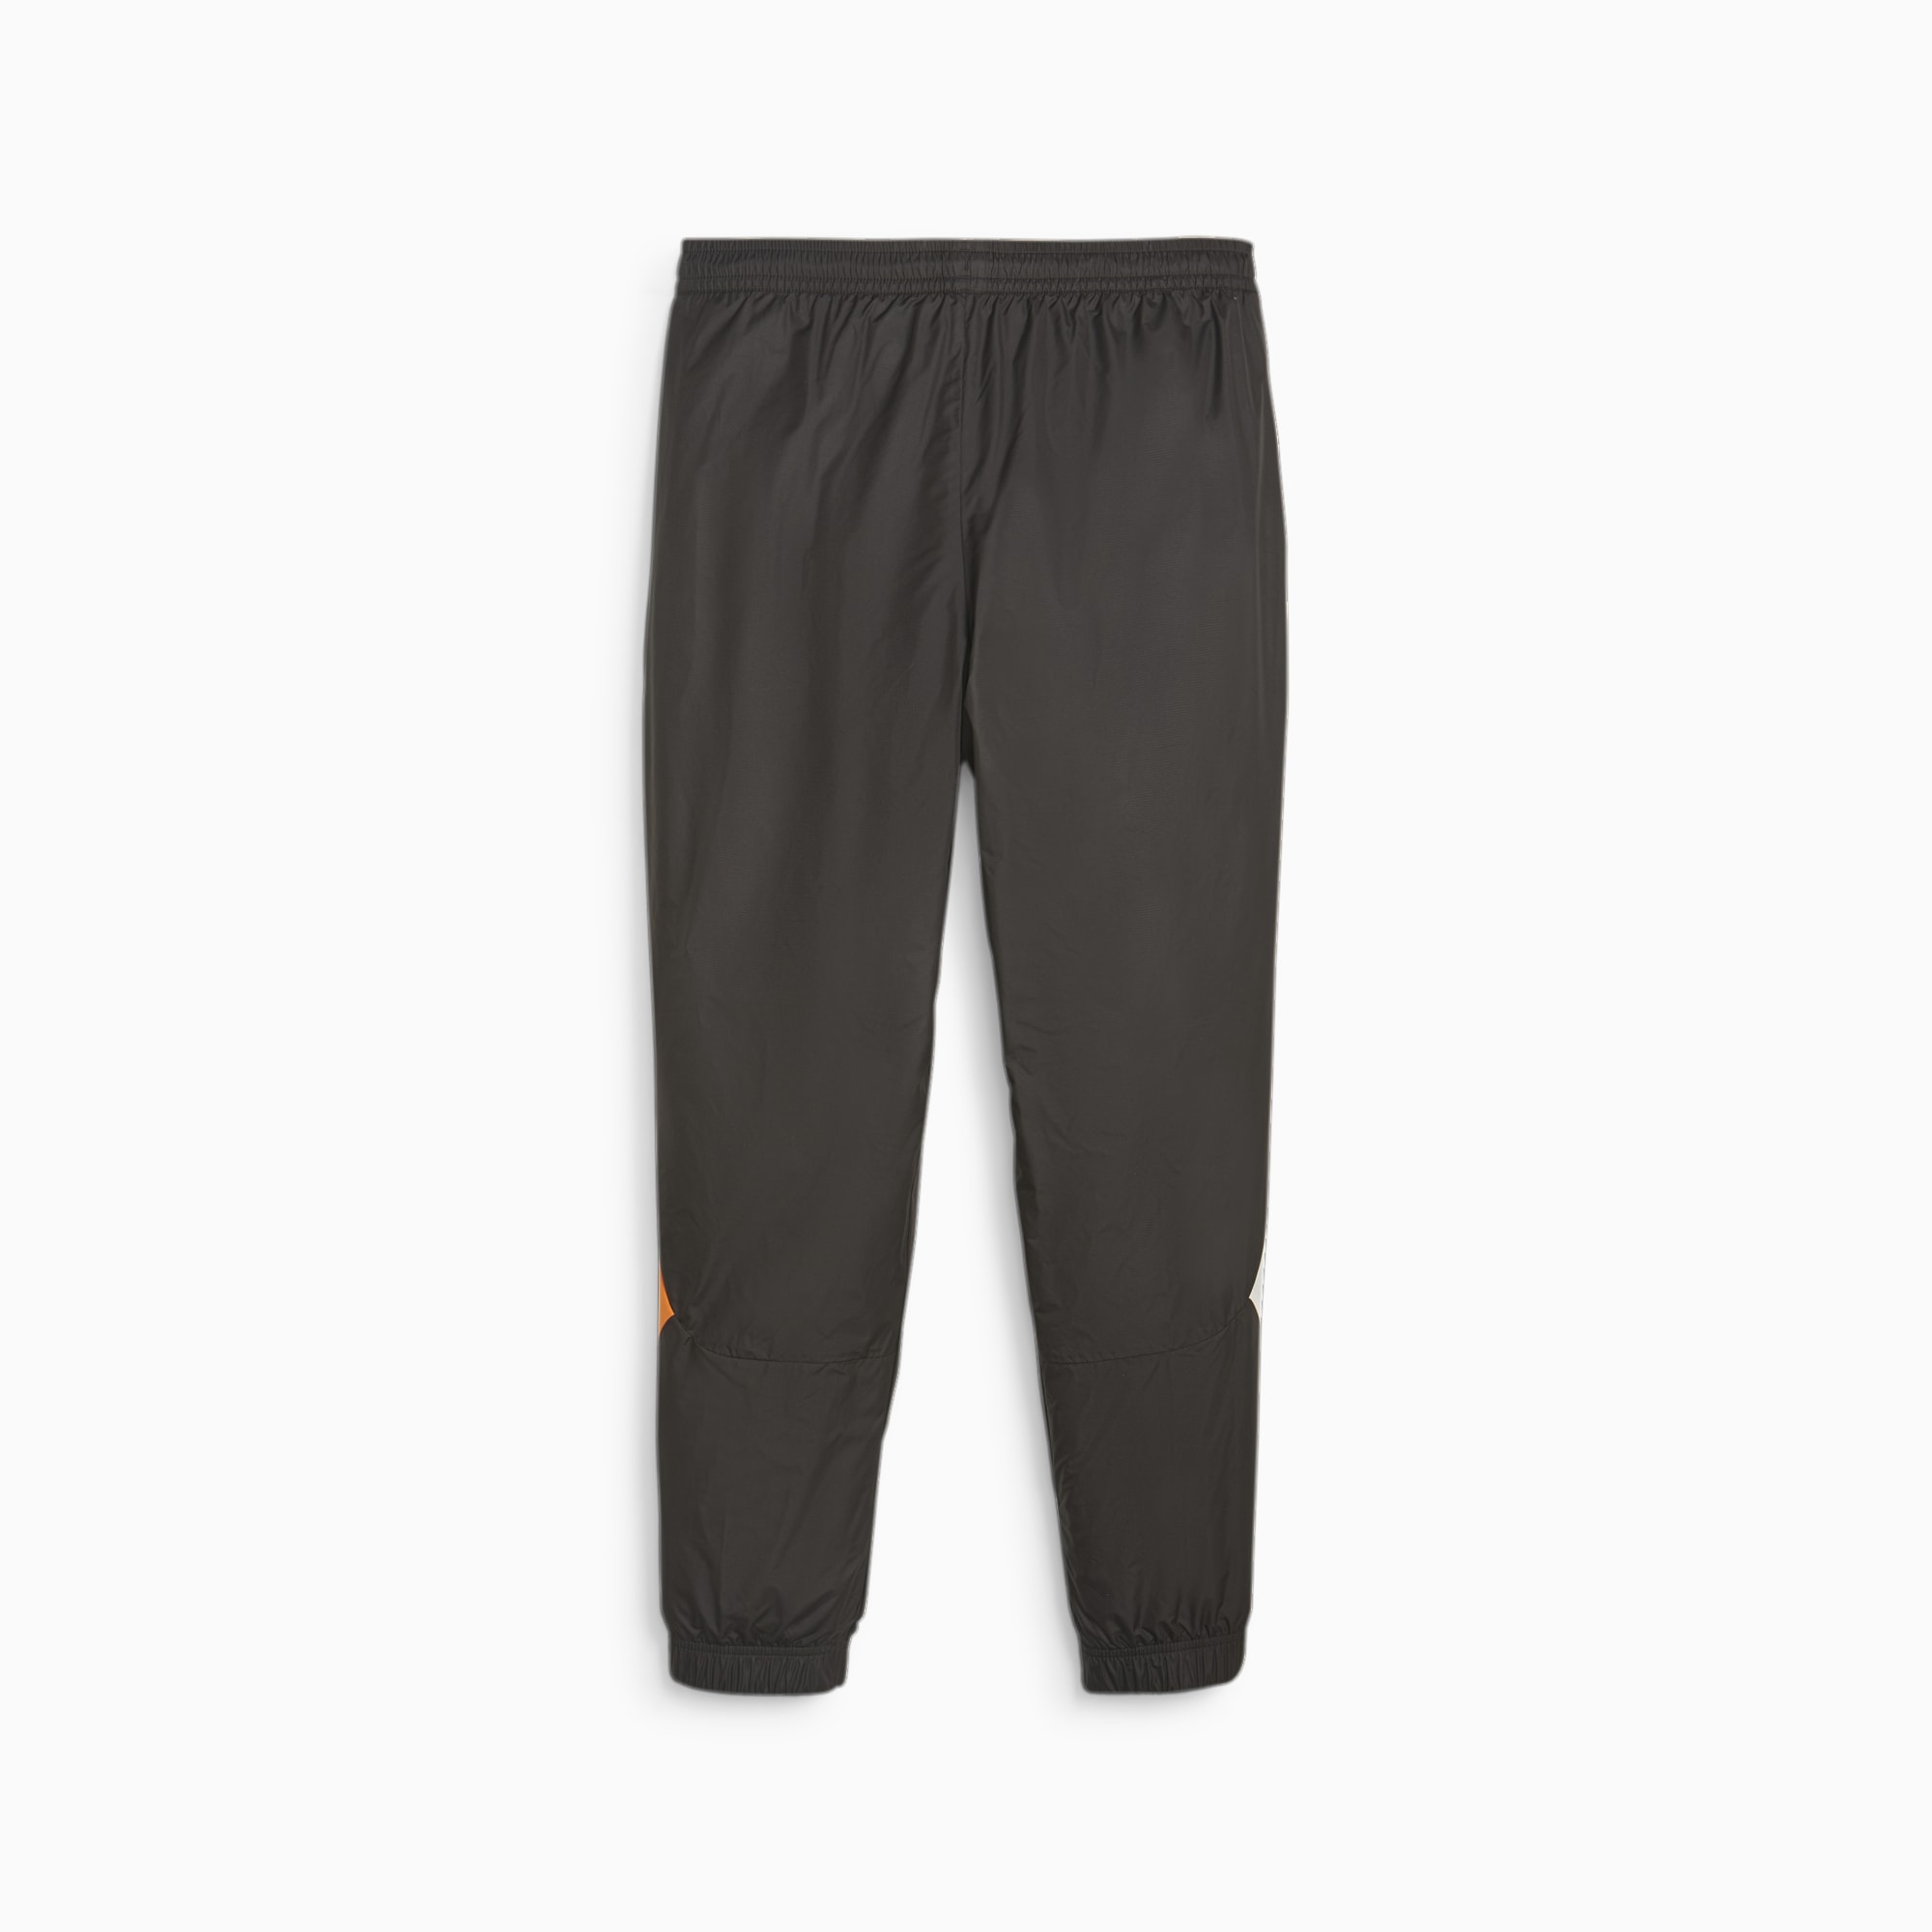 Men's PUMA Olympique De Marseille Prematch Football Pants, Black/Flat Dark Grey, Size XL, Clothing